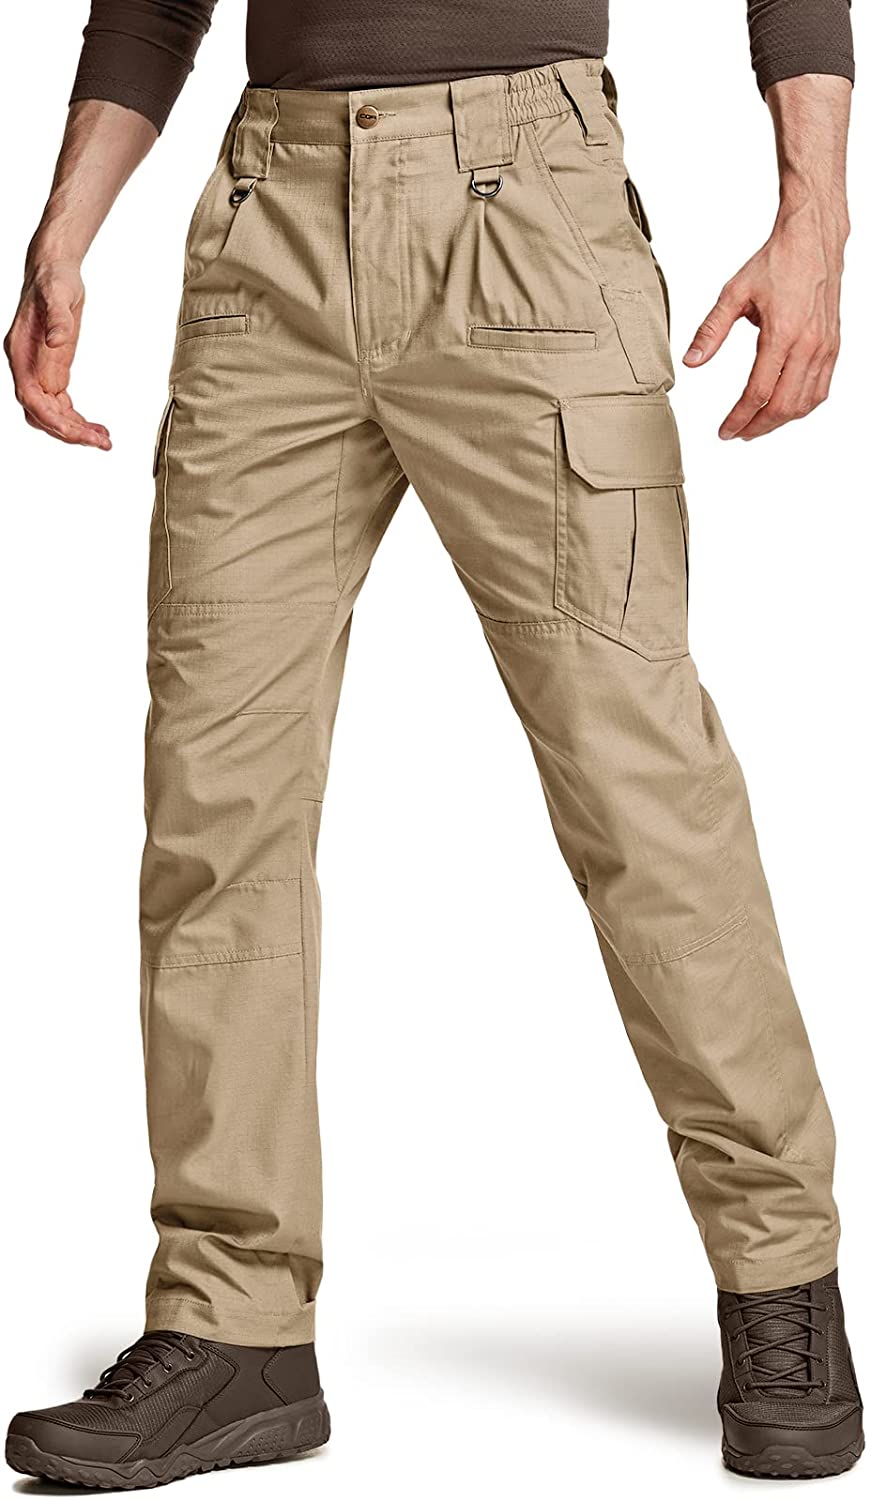 CQR Men's Flex Stretch Tactical Pants Water Resistant Ripstop Cargo Pants Lightweight EDC Outdoor Hiking Work Pants 